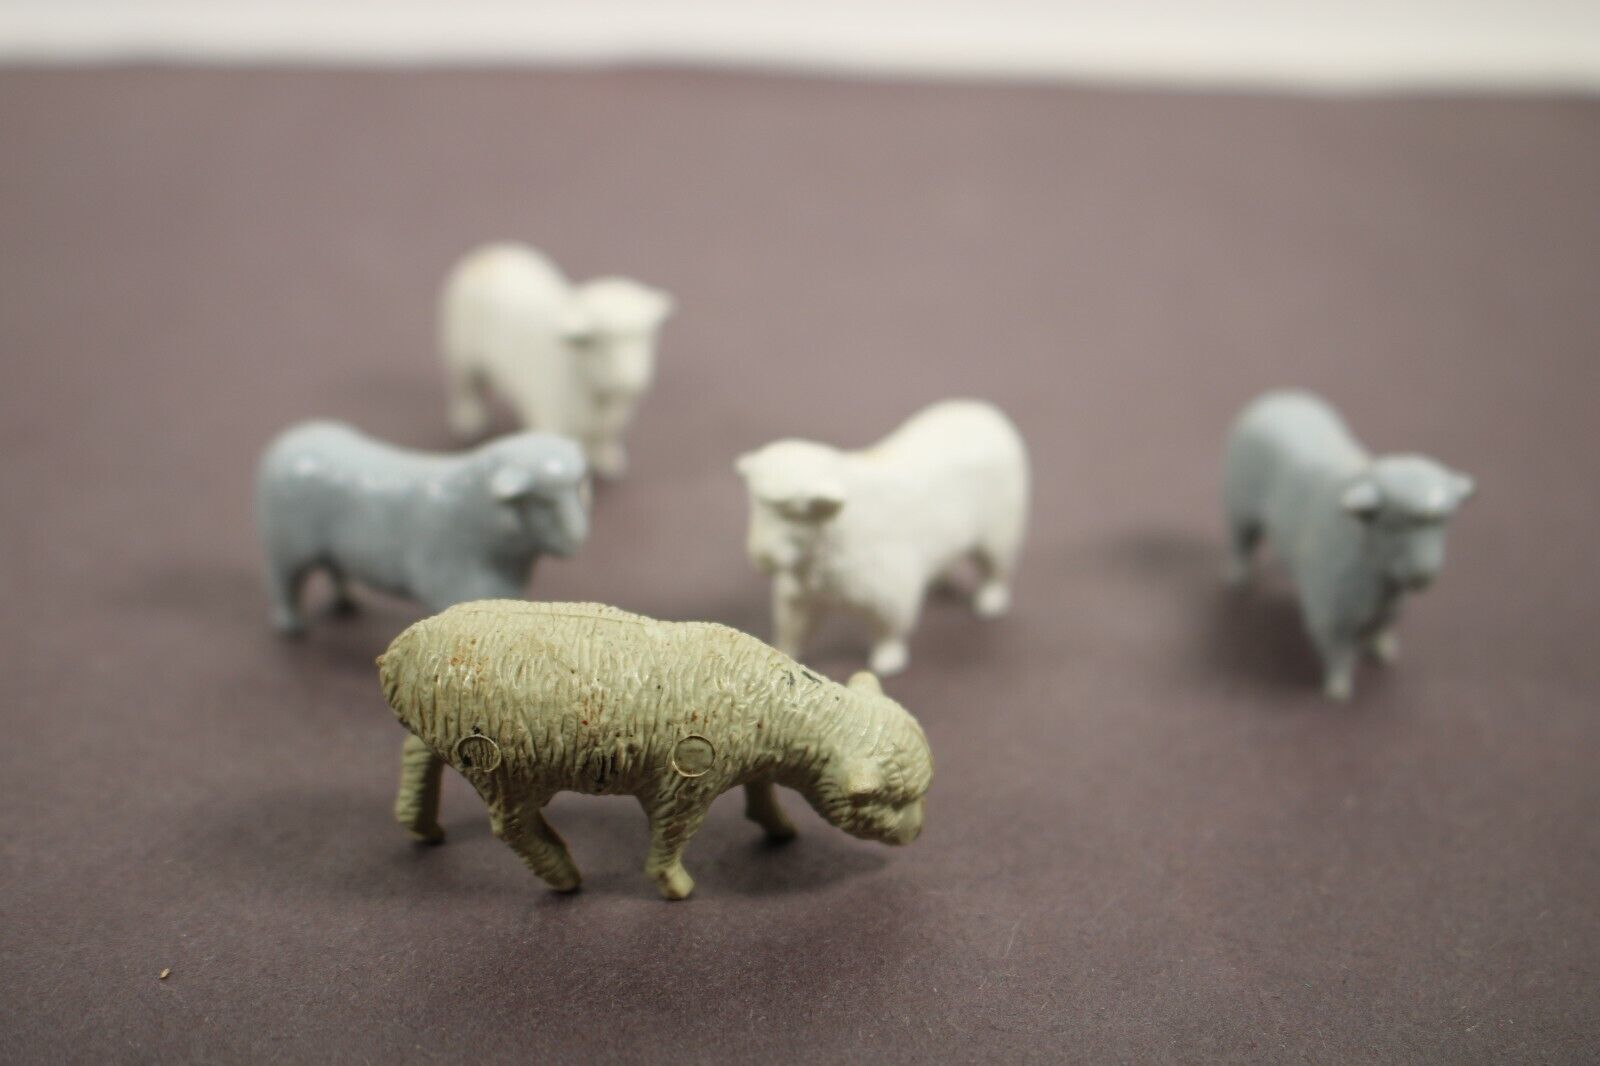 Lot of 5 Vintage Farm Animal Toys - Lambs Sheep LQQK